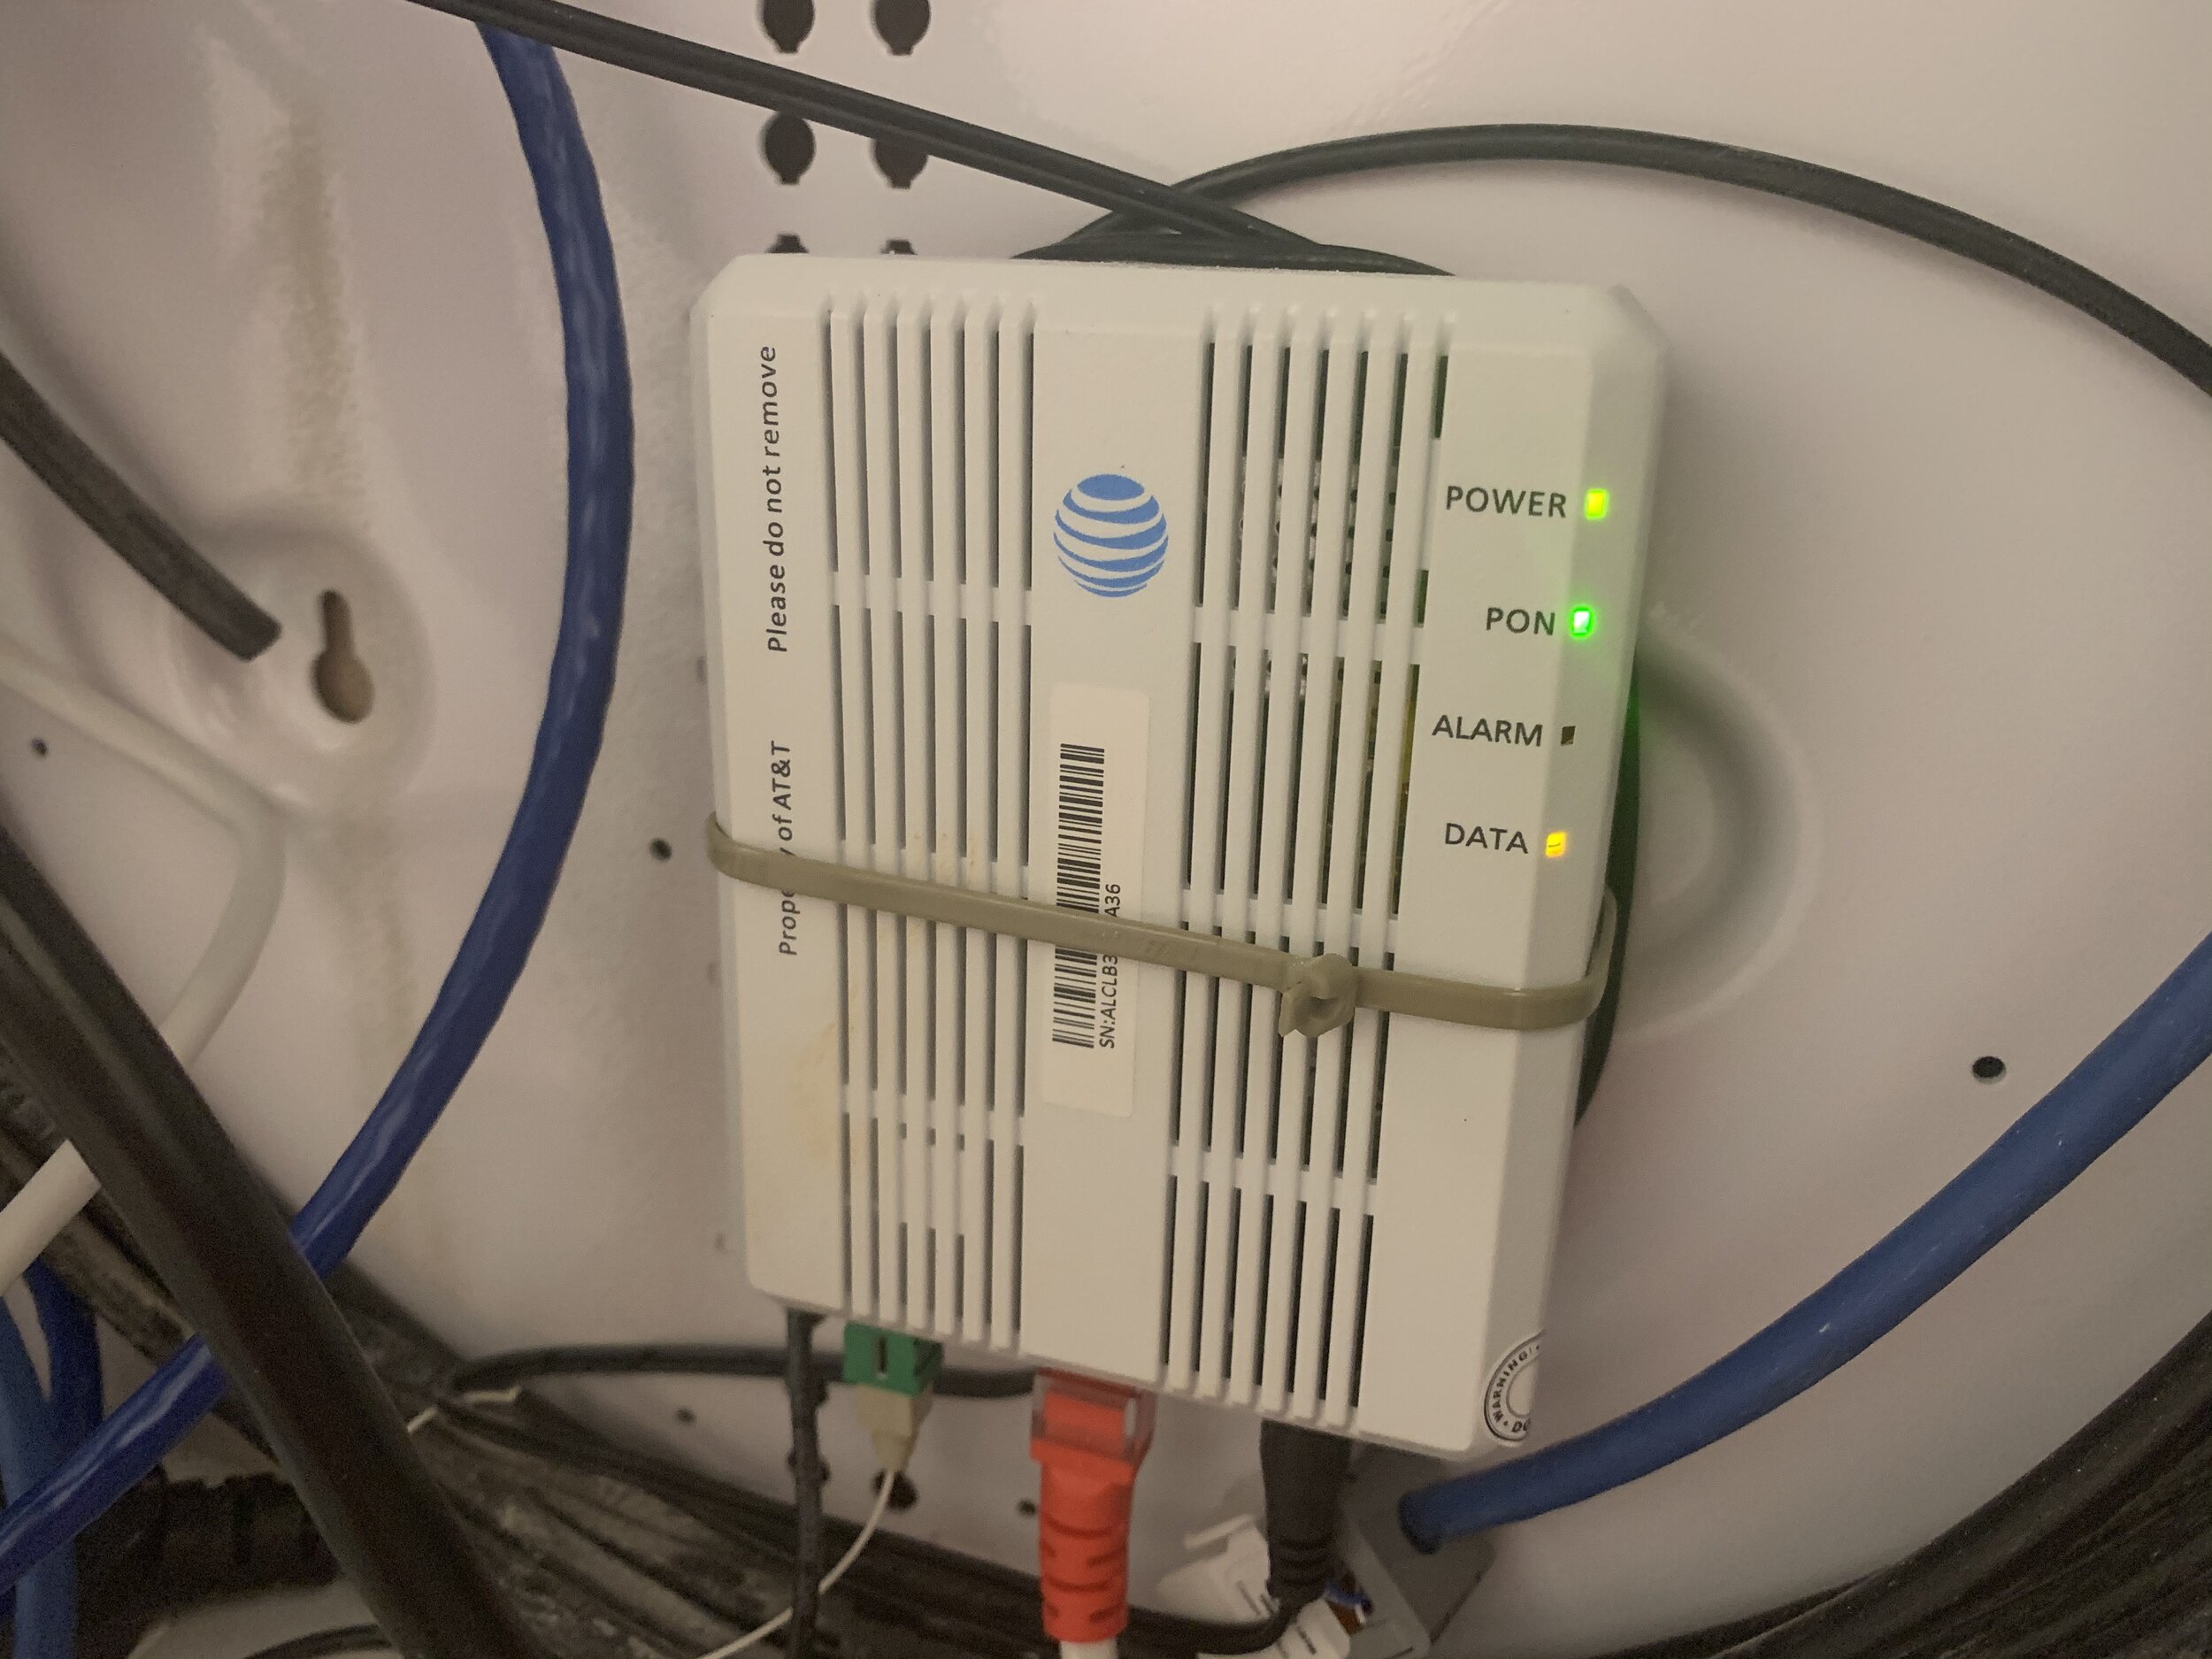 att router configuration